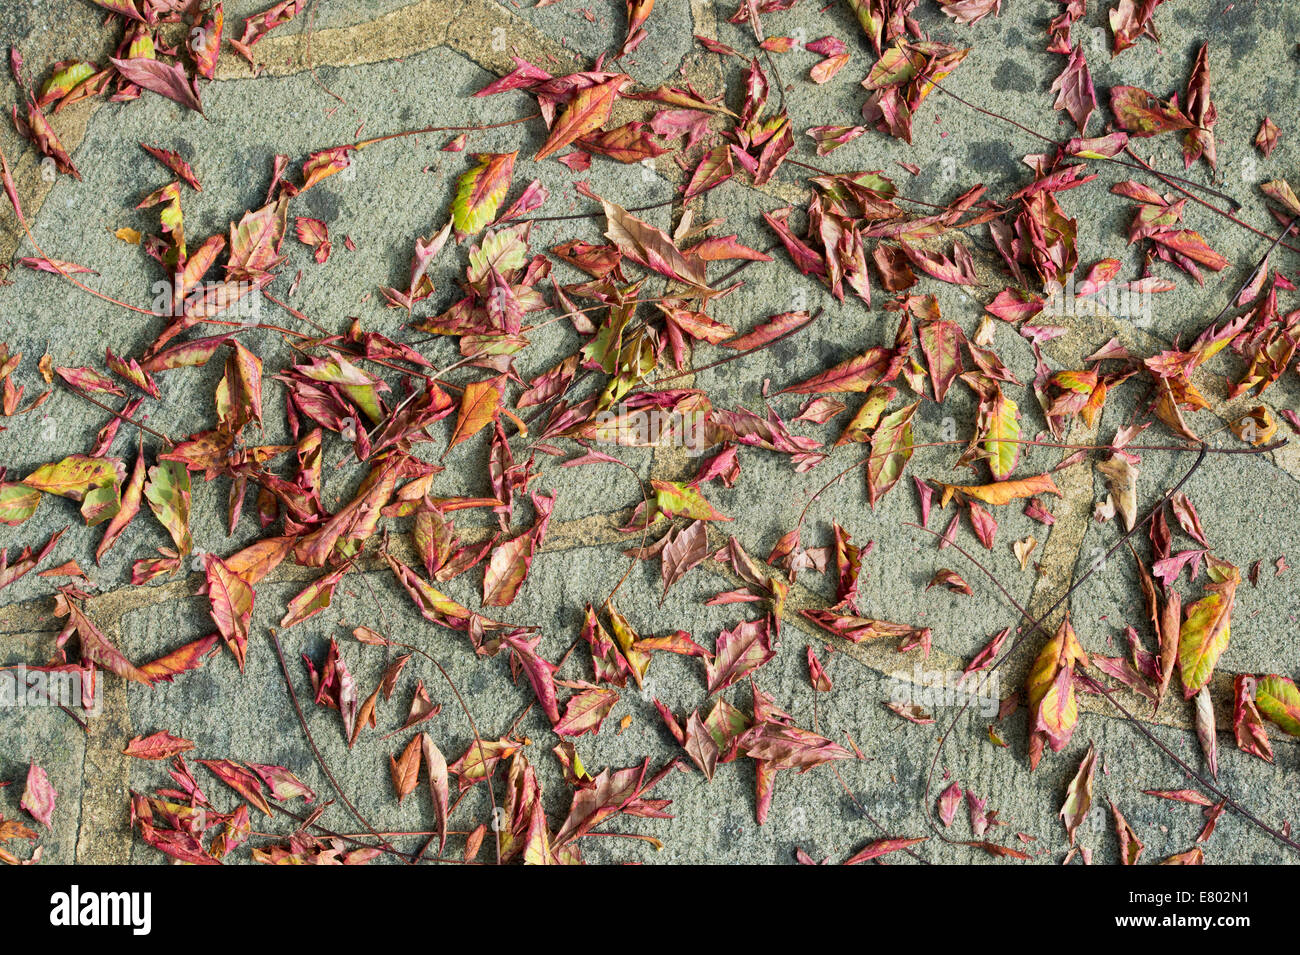 Koelreuteria paniculata. Pride of India / Golden Rain Tree leaves on a concrete garden path. UK Stock Photo